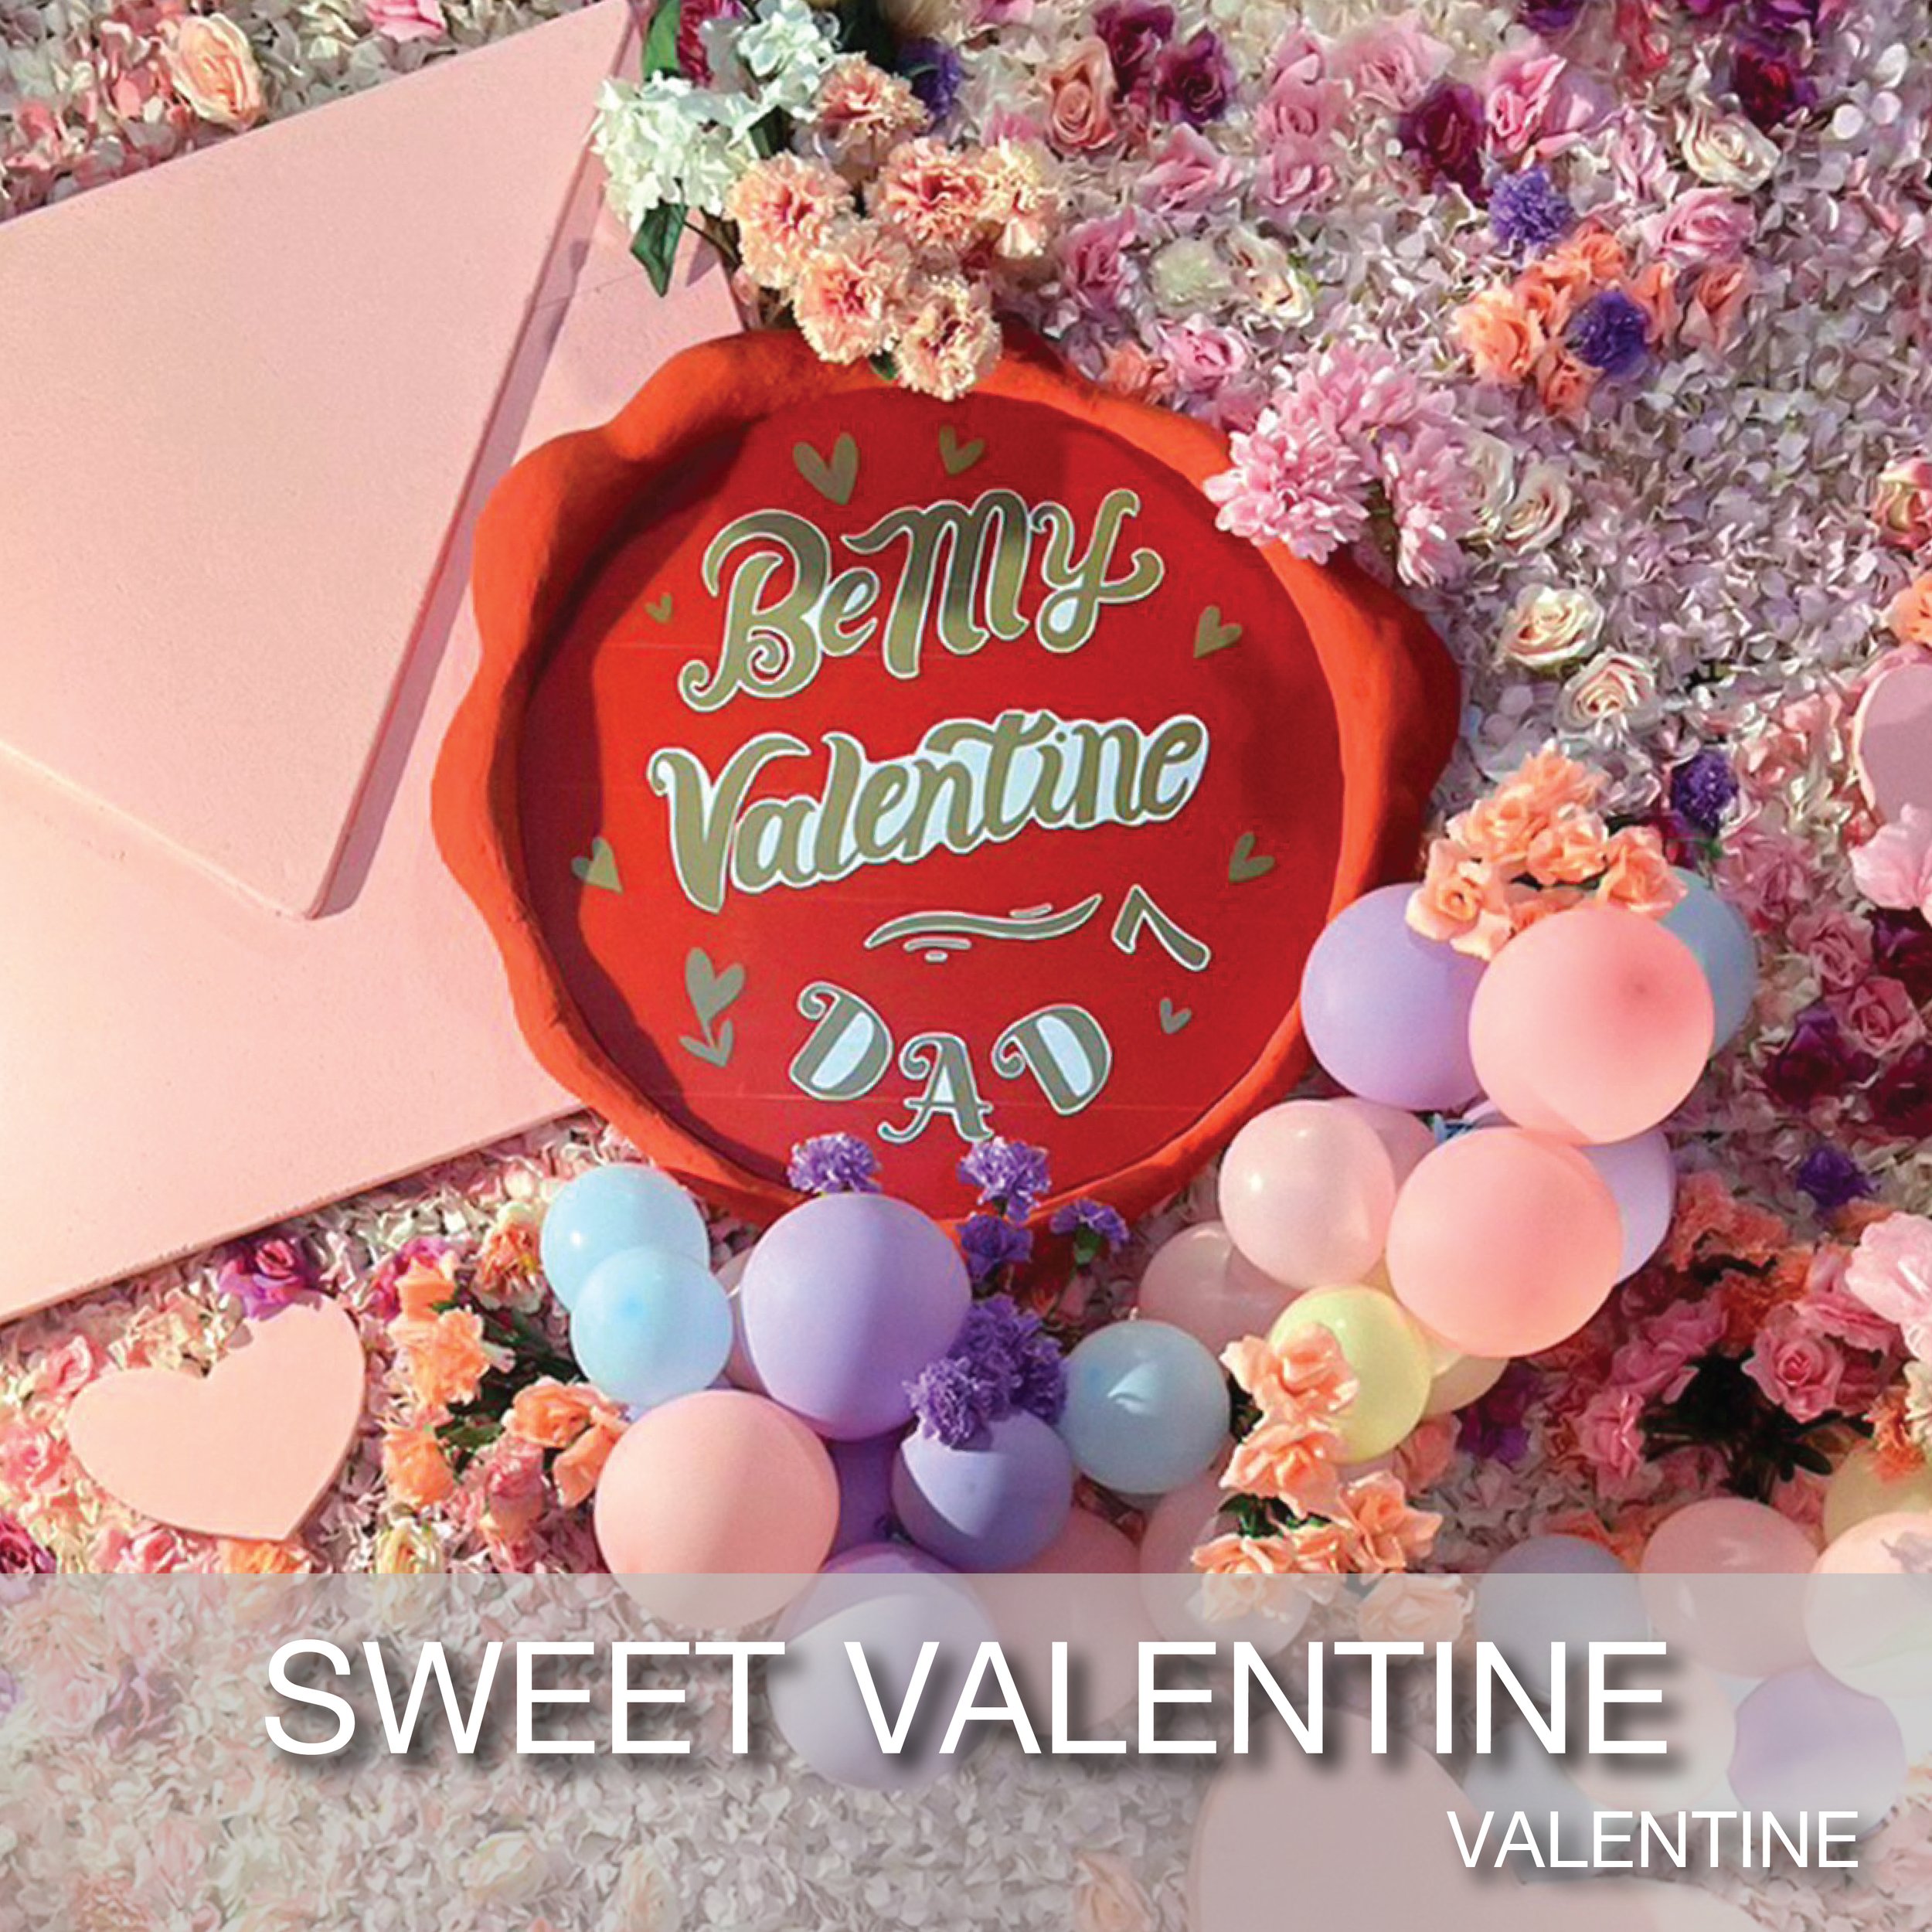 Cover_Popular Theme_Valentine-Sweet Valentine-01.jpg